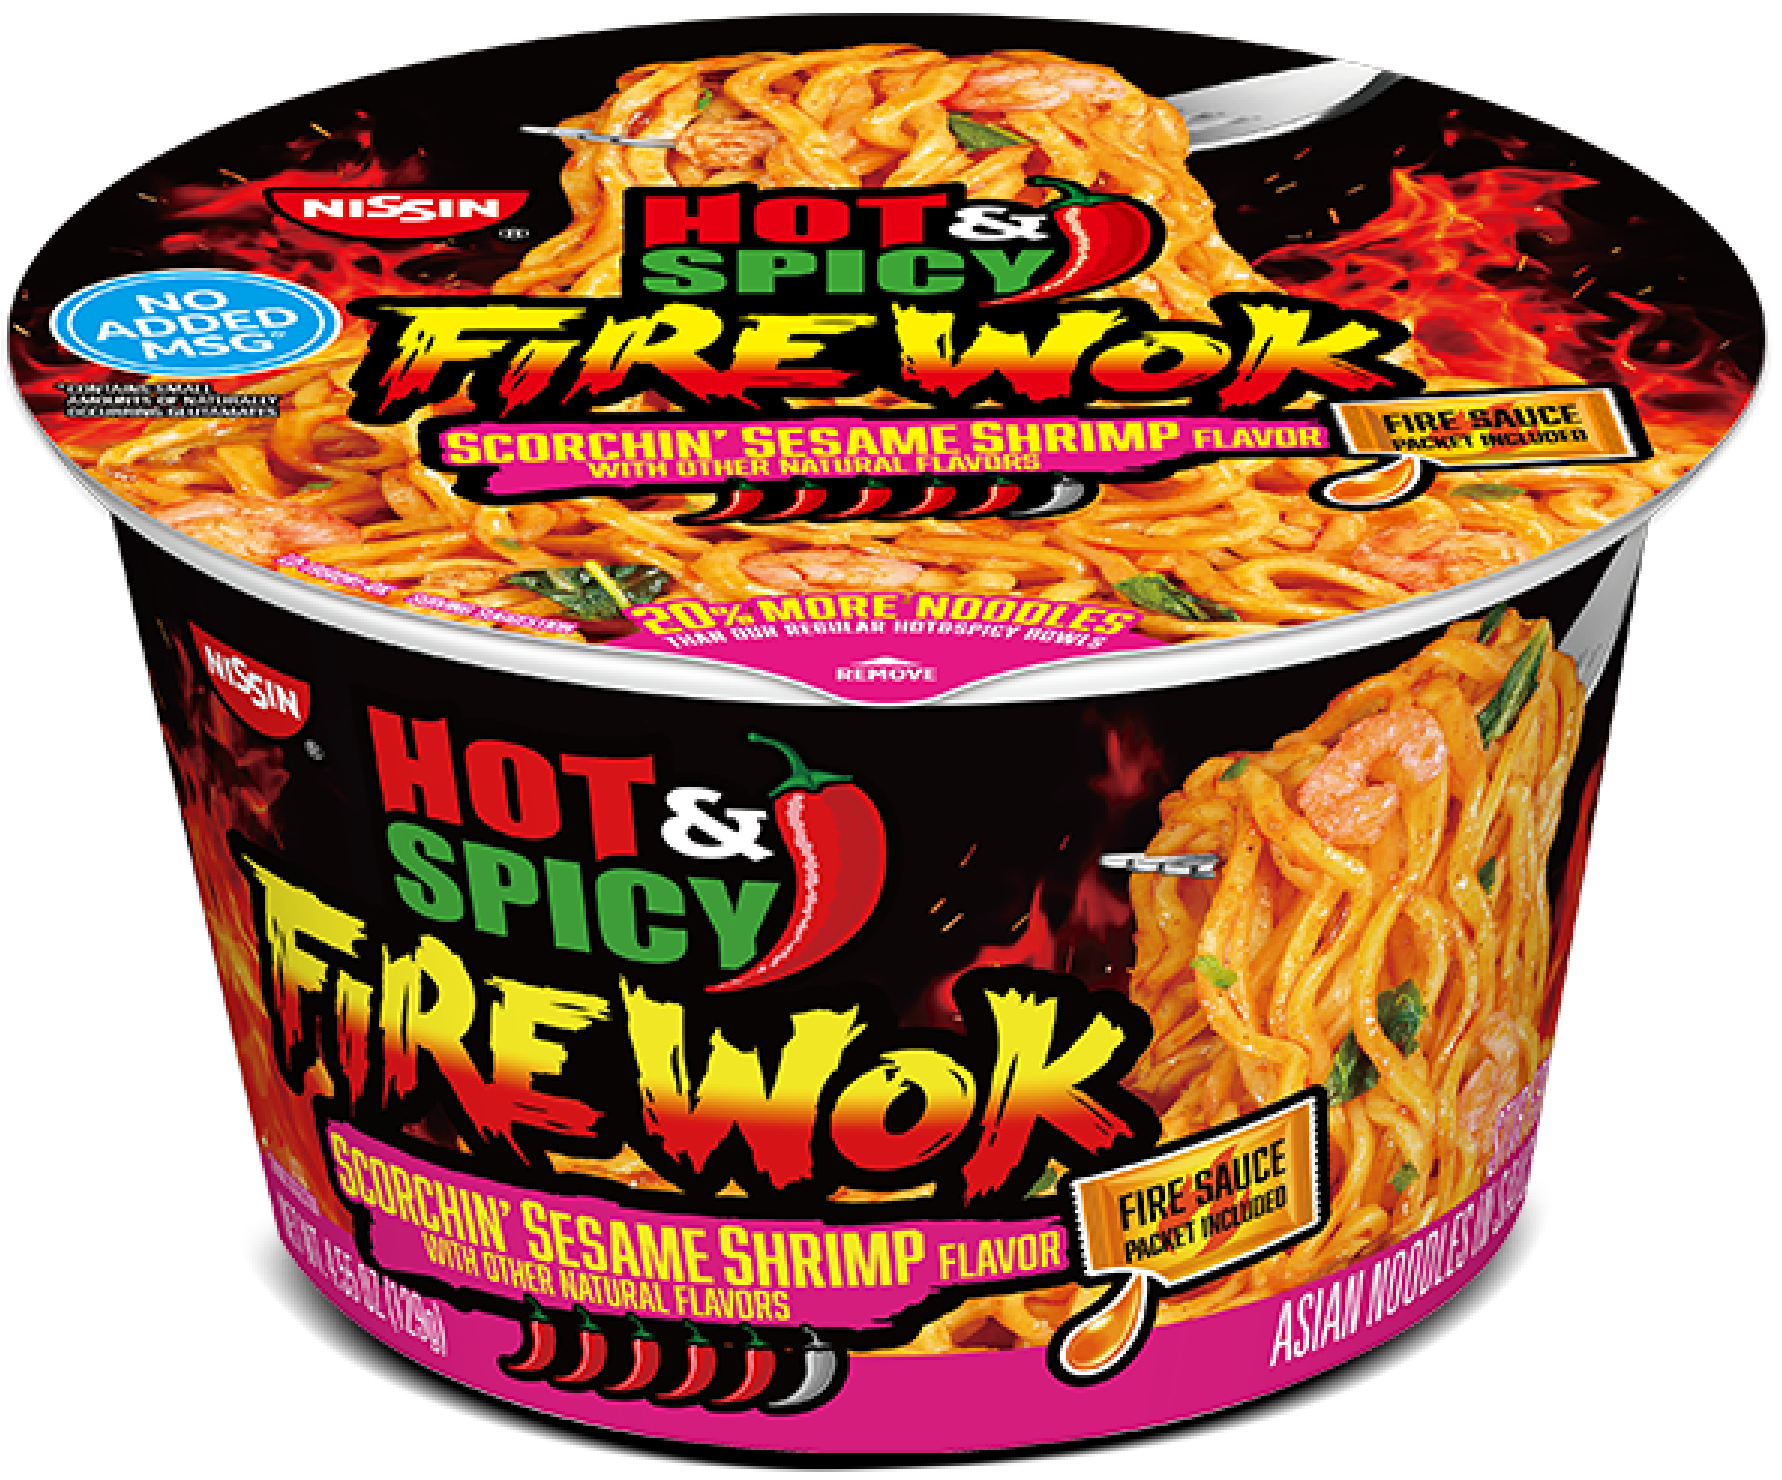 Hot & Spicy Fire Wok Scorchin’ Sesame Shrimp